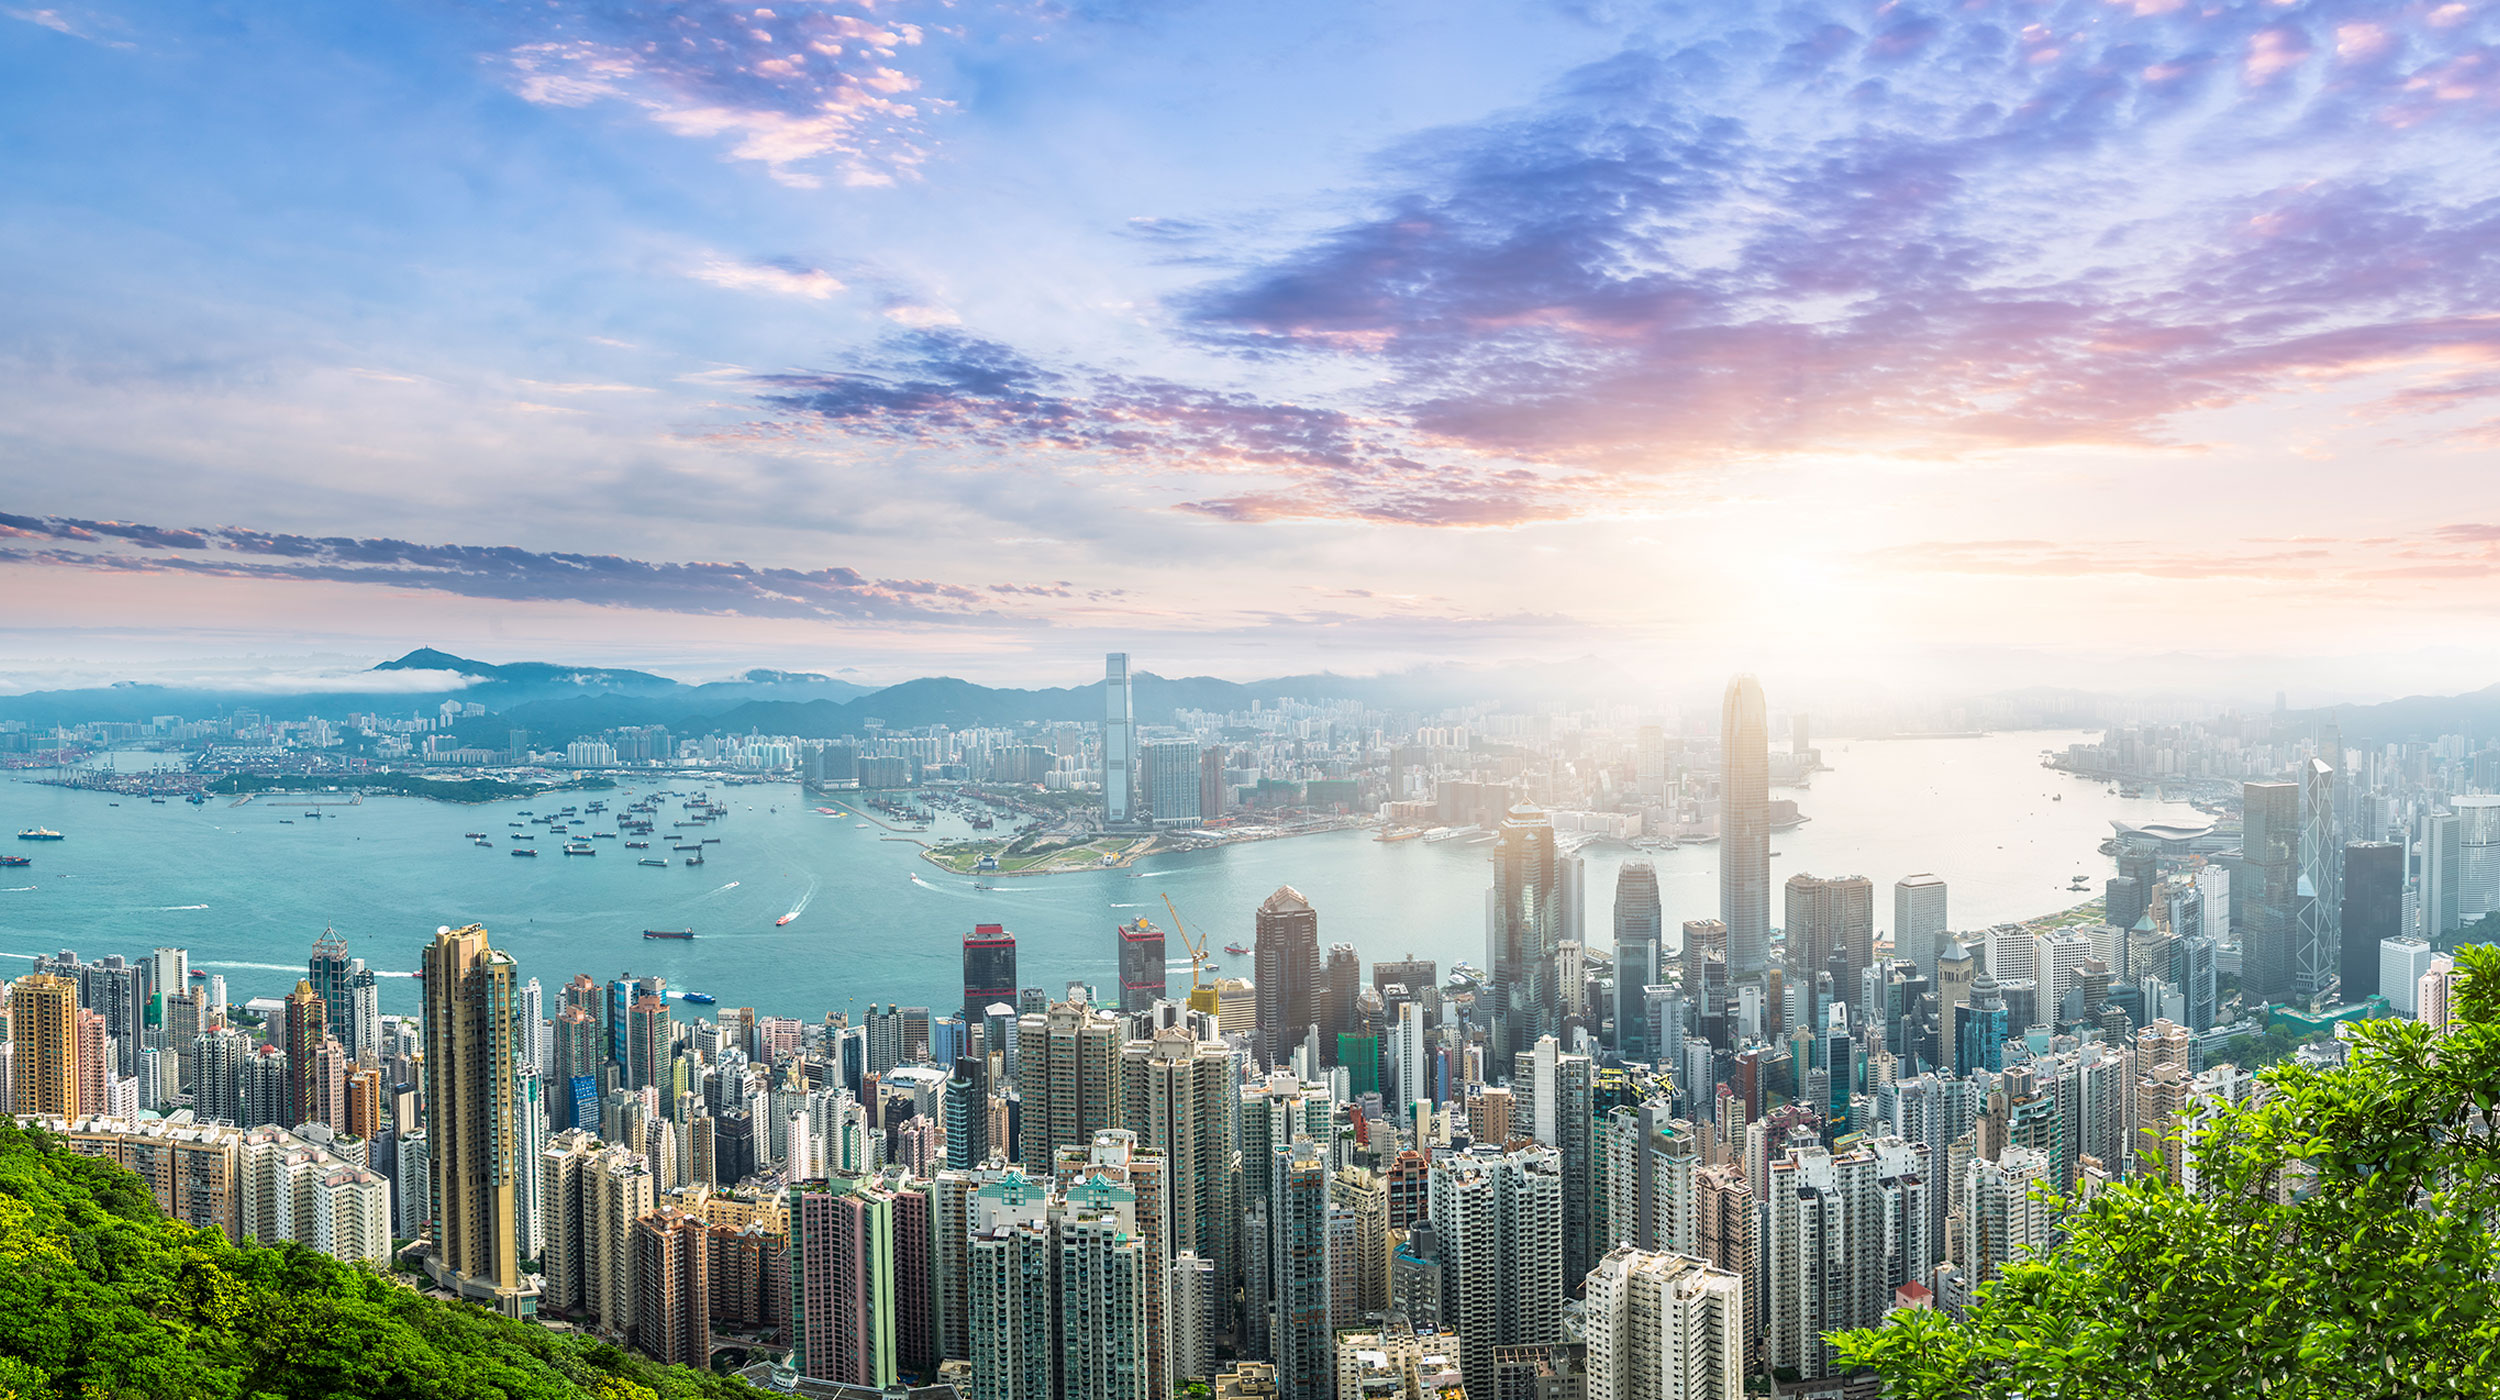 View of Hong Kong, China from above, midday.